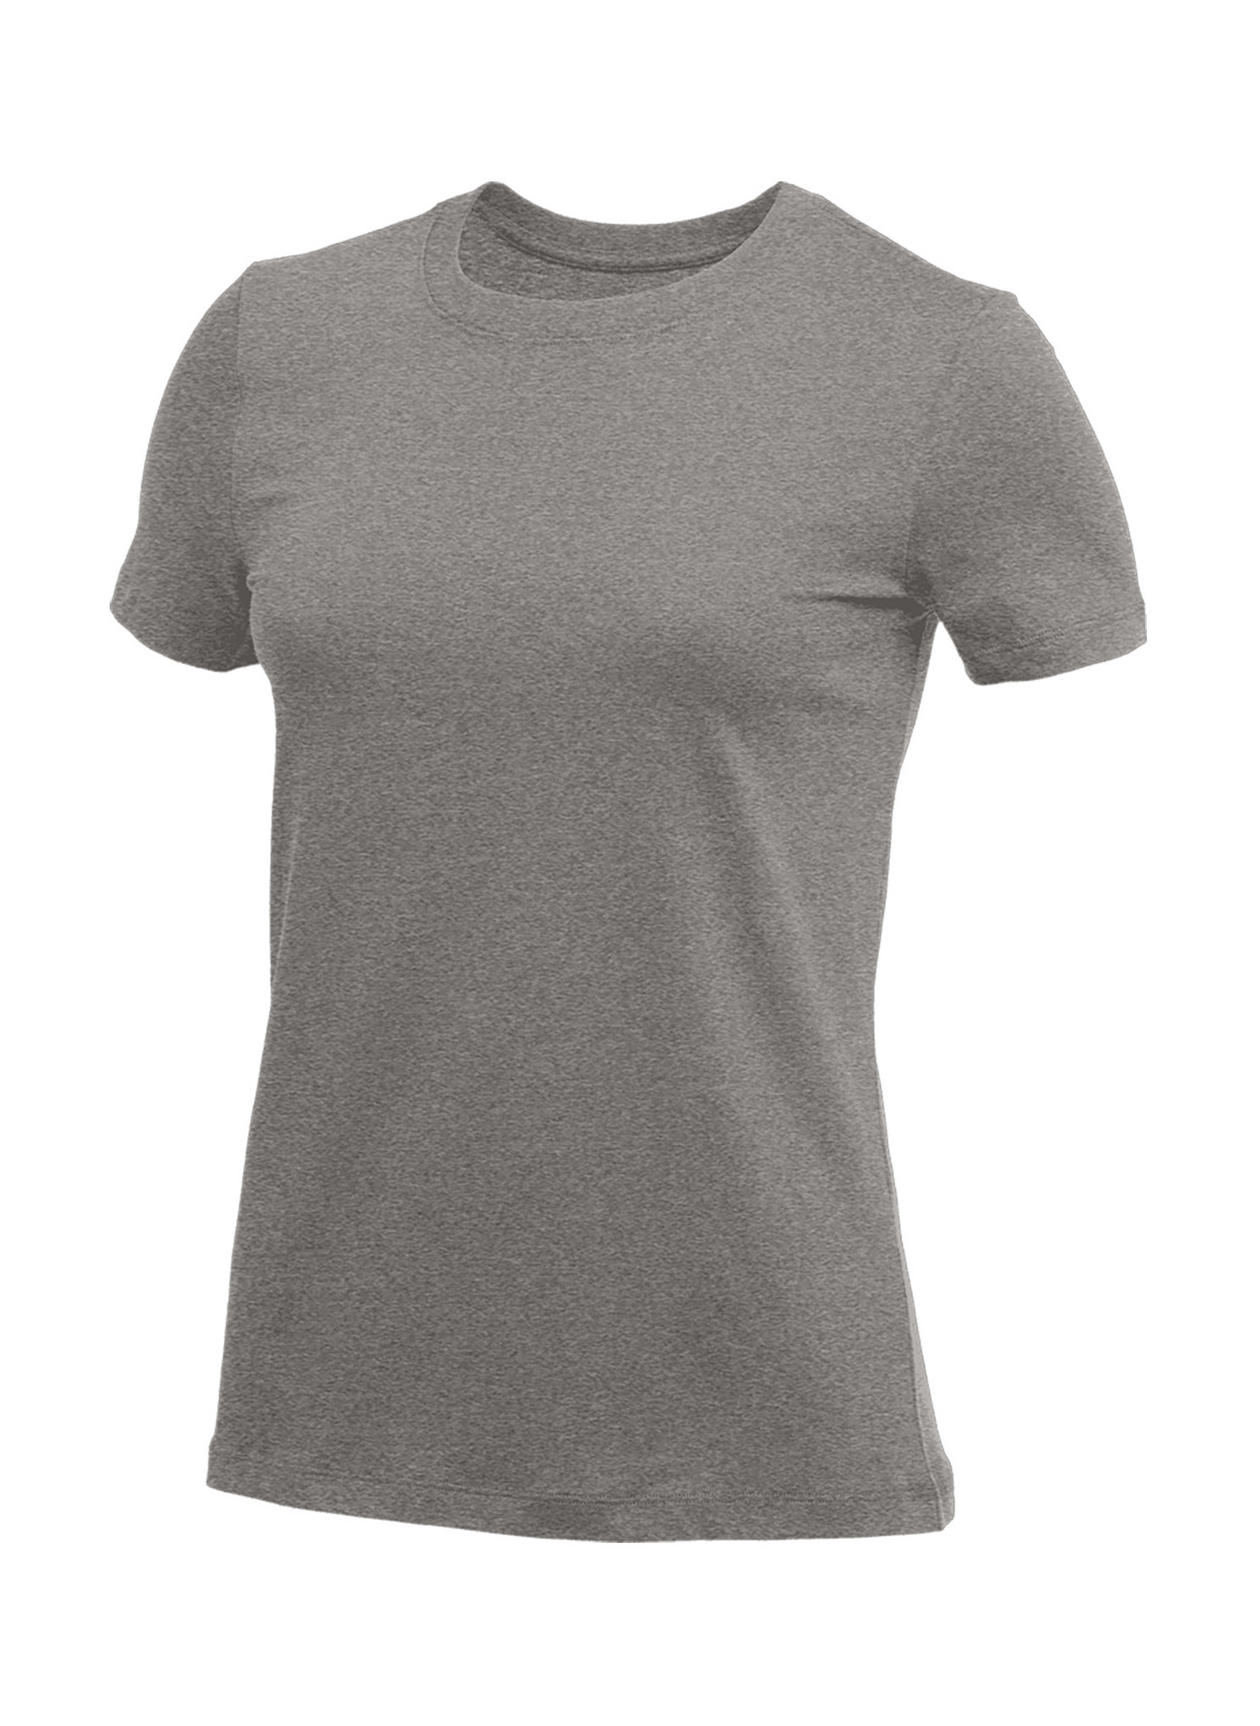 Nike Women's Dark Grey Heather T-Shirt